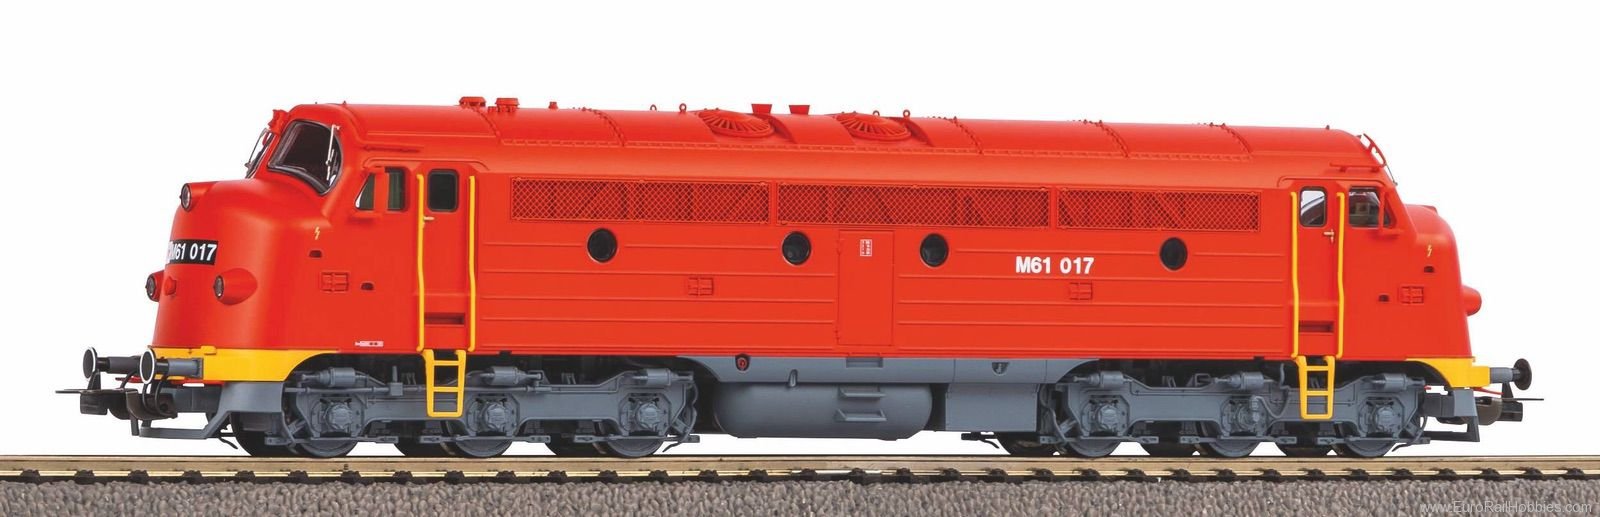 Piko 52482 Diesel Locomotive BR M61 MAV IV (Marklin AC D